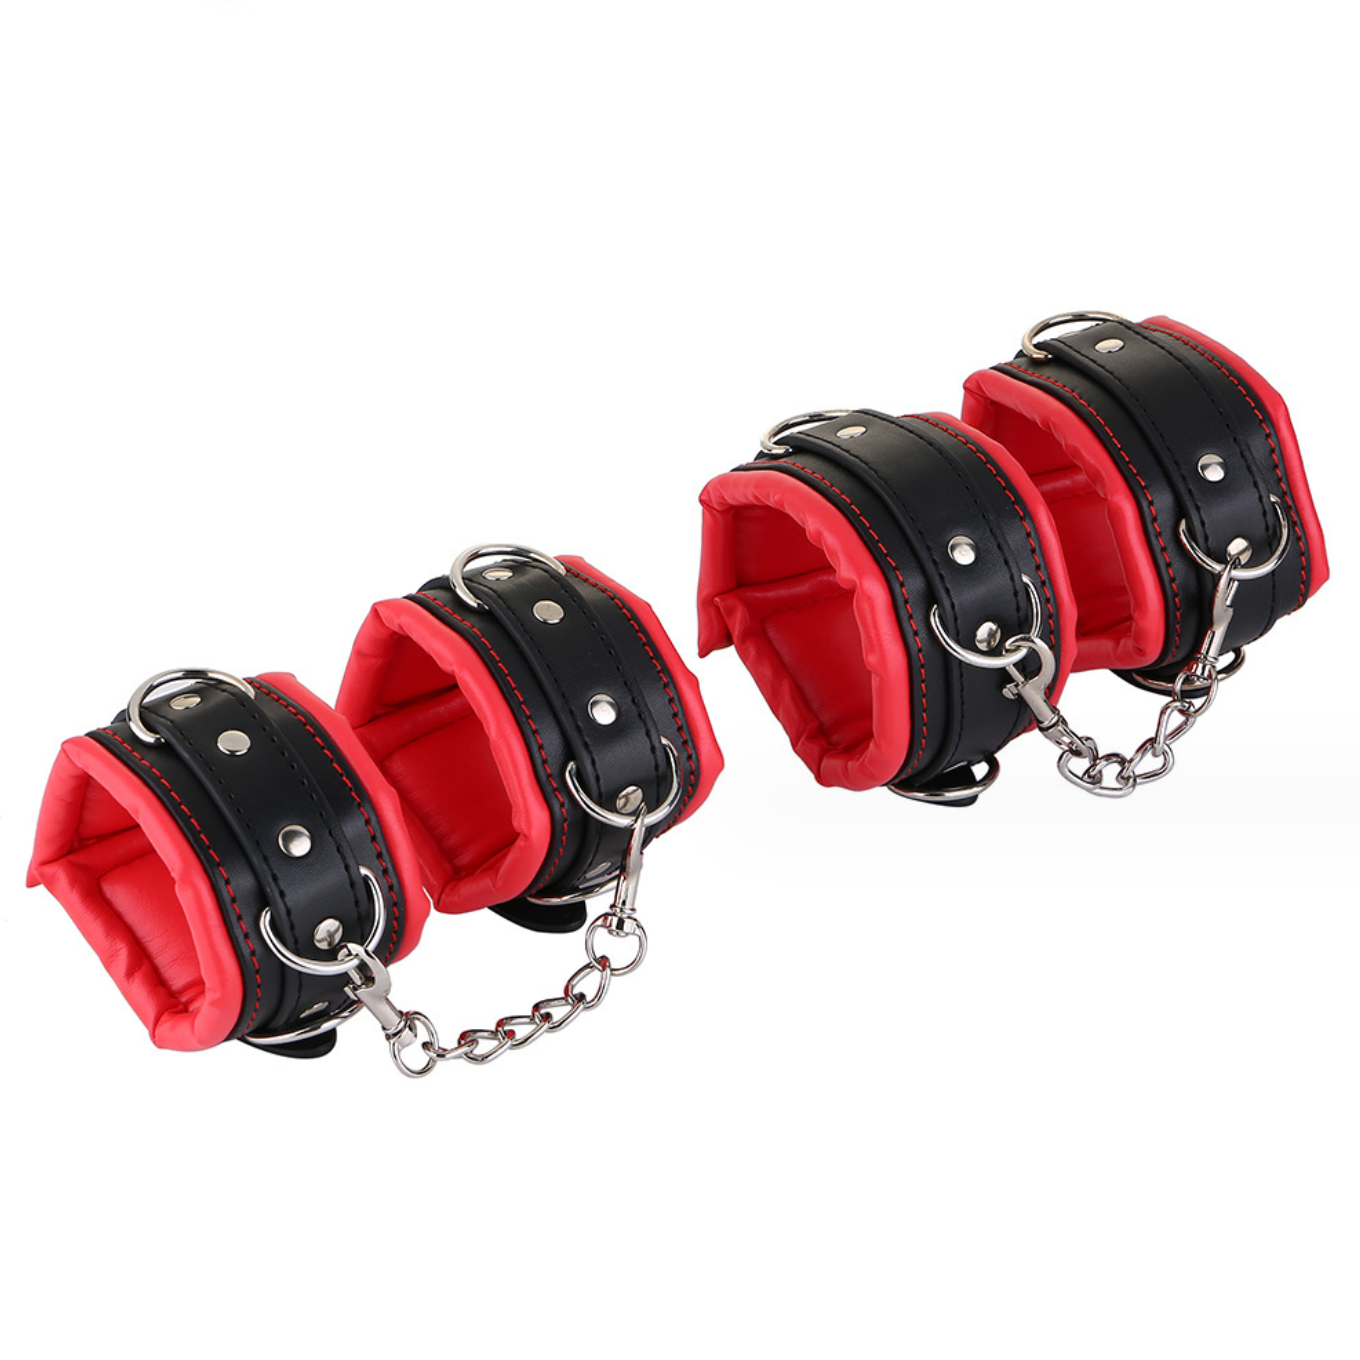 Stainless steel bondage restraint (with cuffs) BDSM 不锈钢一字束缚捆绑 BDSM 1278